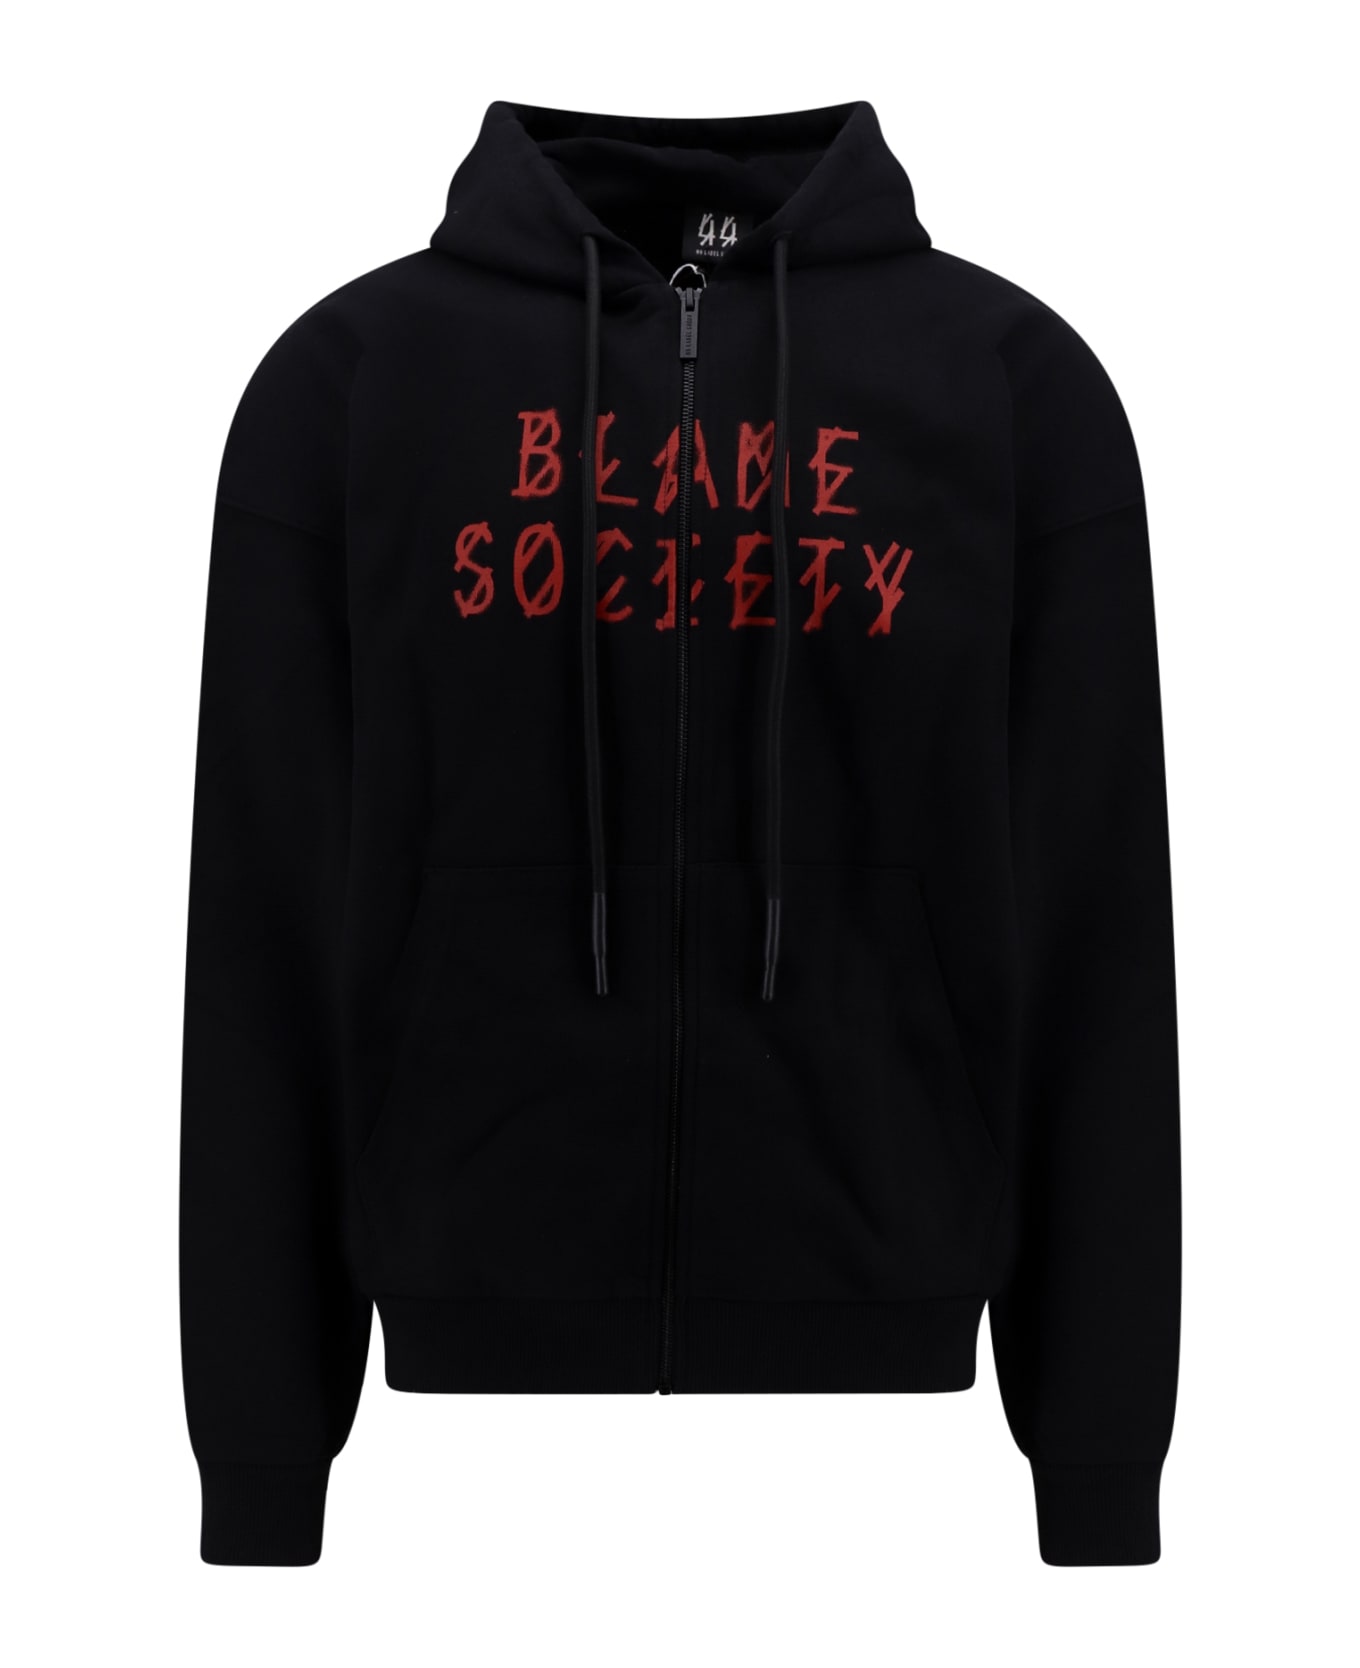 44 Label Group Sweatshirt - Black フリース